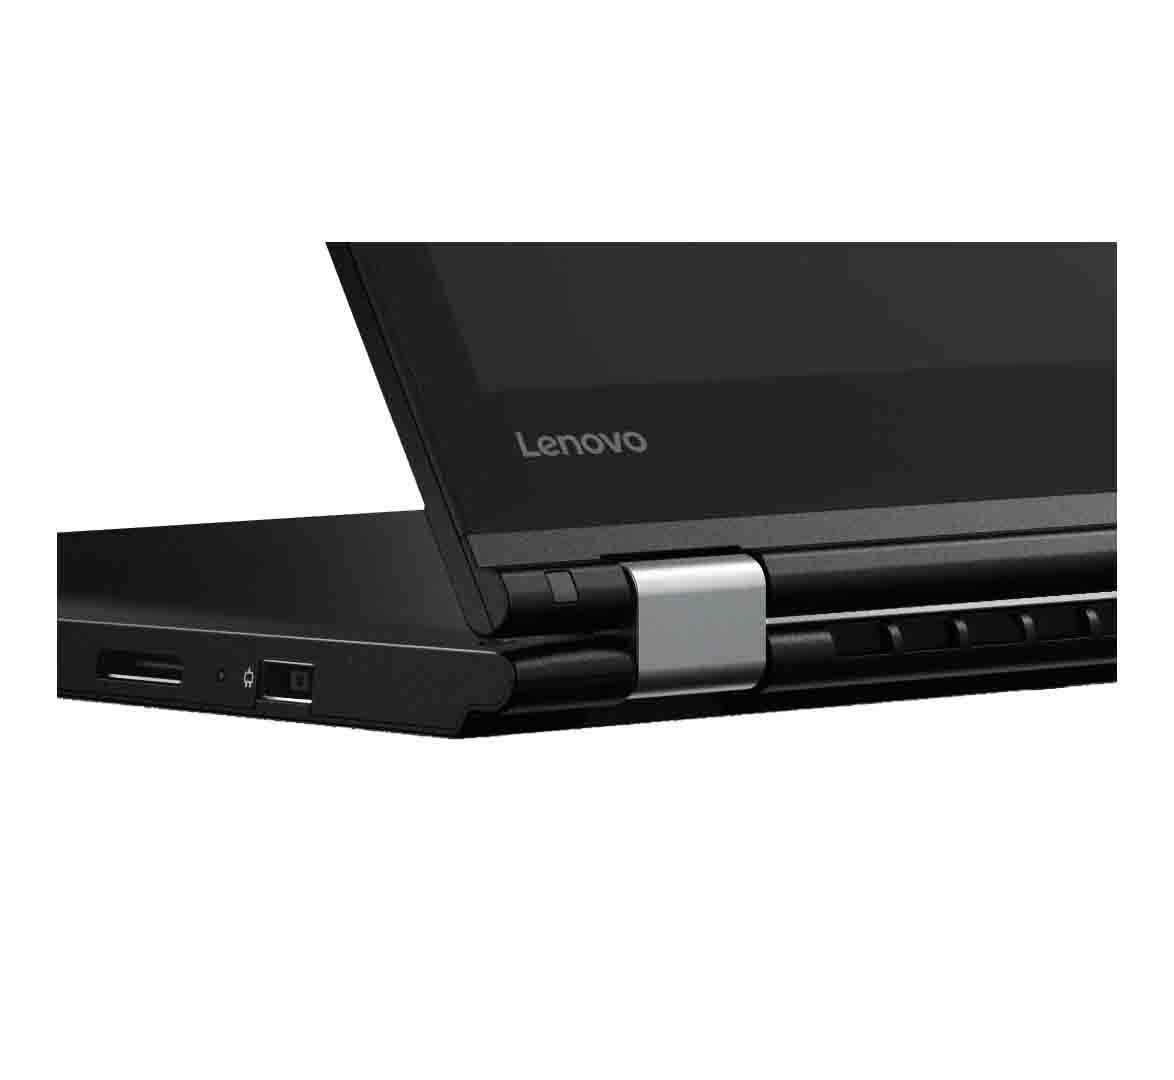 Lenovo ThinkPad P40 Yoga Business Laptop, Intel Core i7-6th Gen. CPU, 8GB DDR3L RAM, 256GB SSD Hard, 14 NVIDIA QAUDRO M500M 2GB DDR3 Touchscreen 360°, Win 10 (Refurbished)